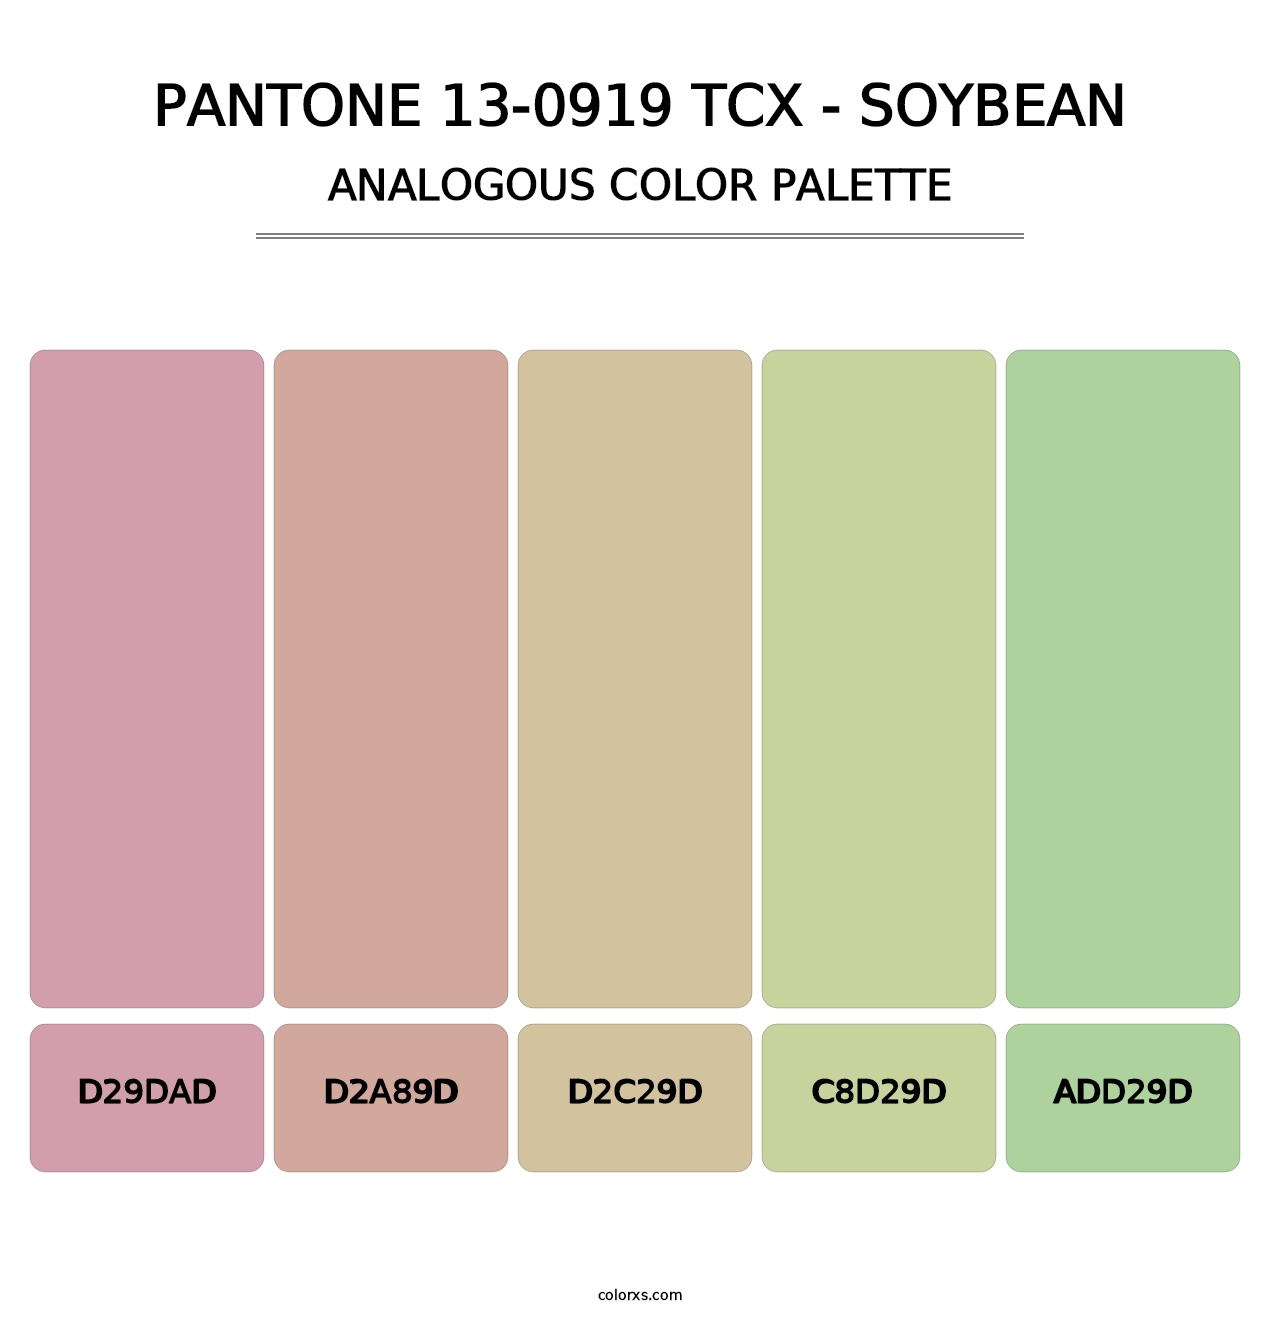 PANTONE 13-0919 TCX - Soybean - Analogous Color Palette